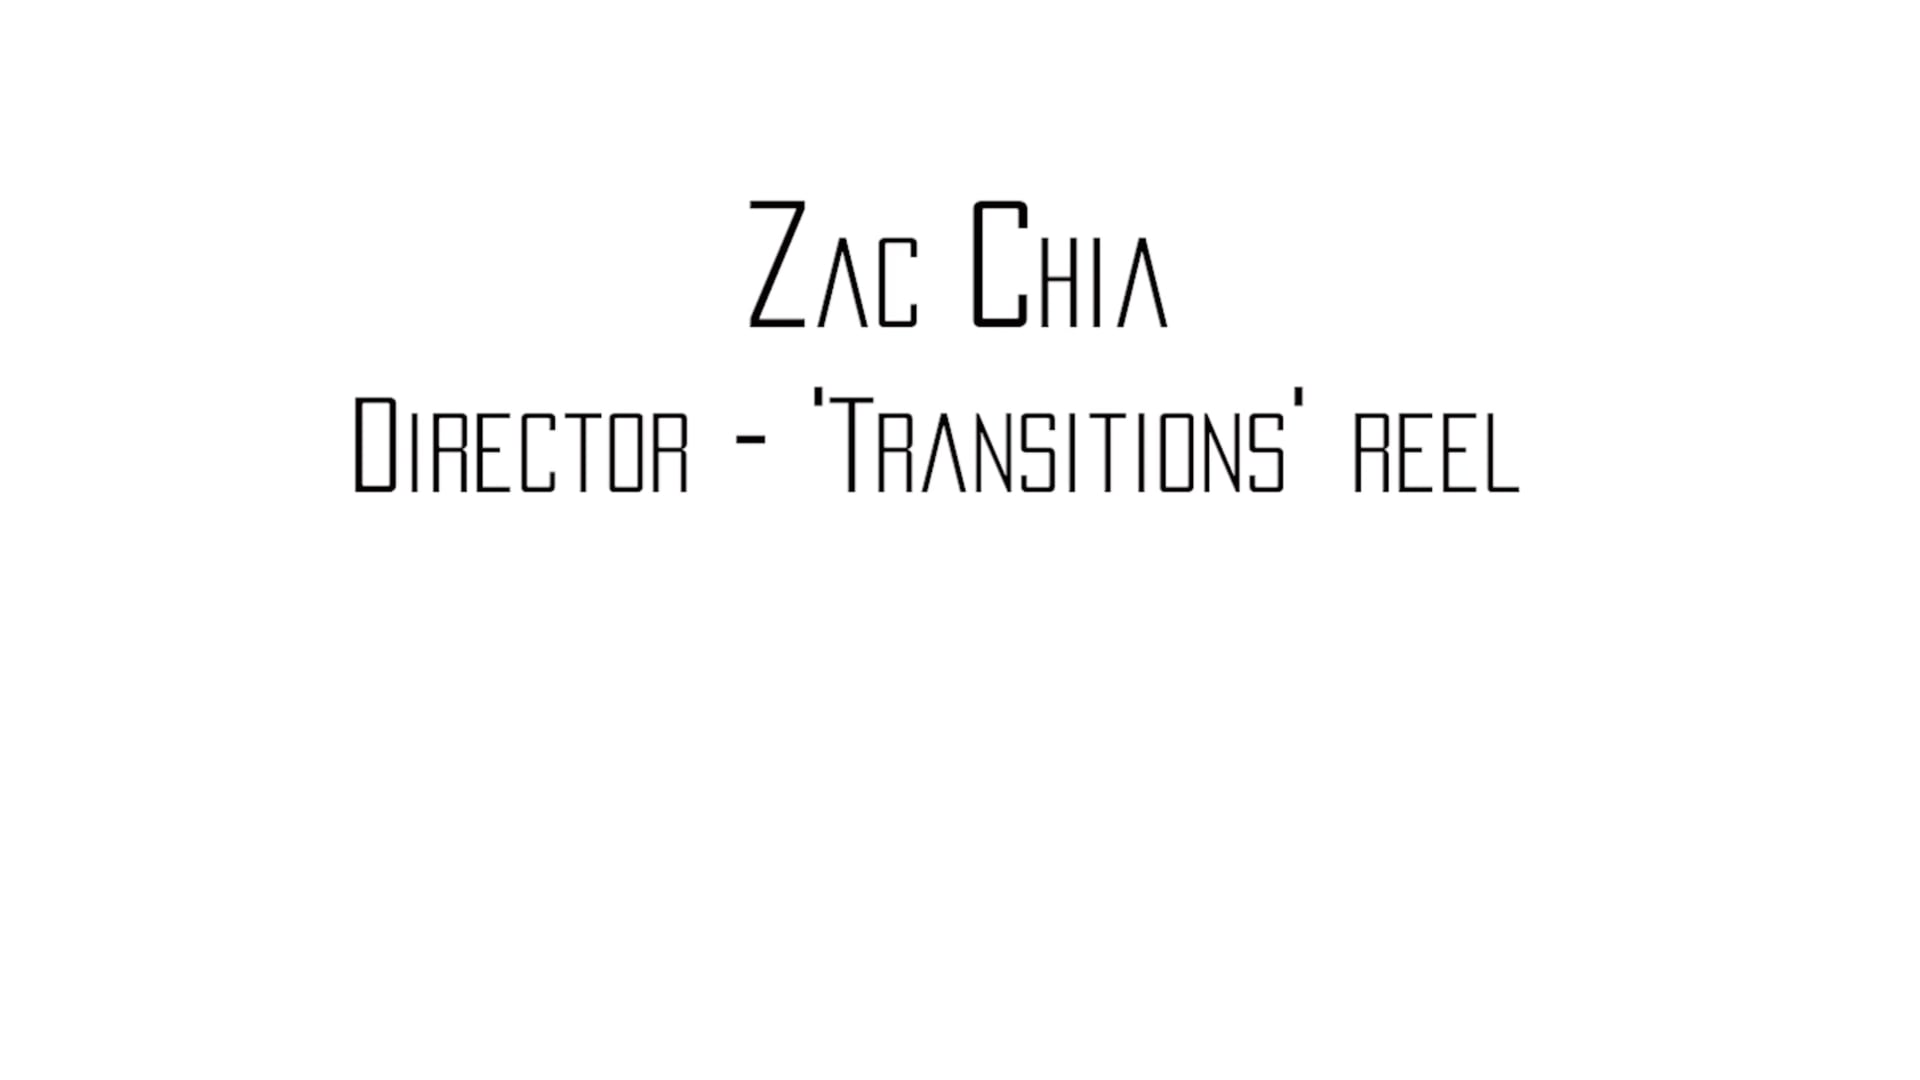 Zac Chia Director: Transitions Reel